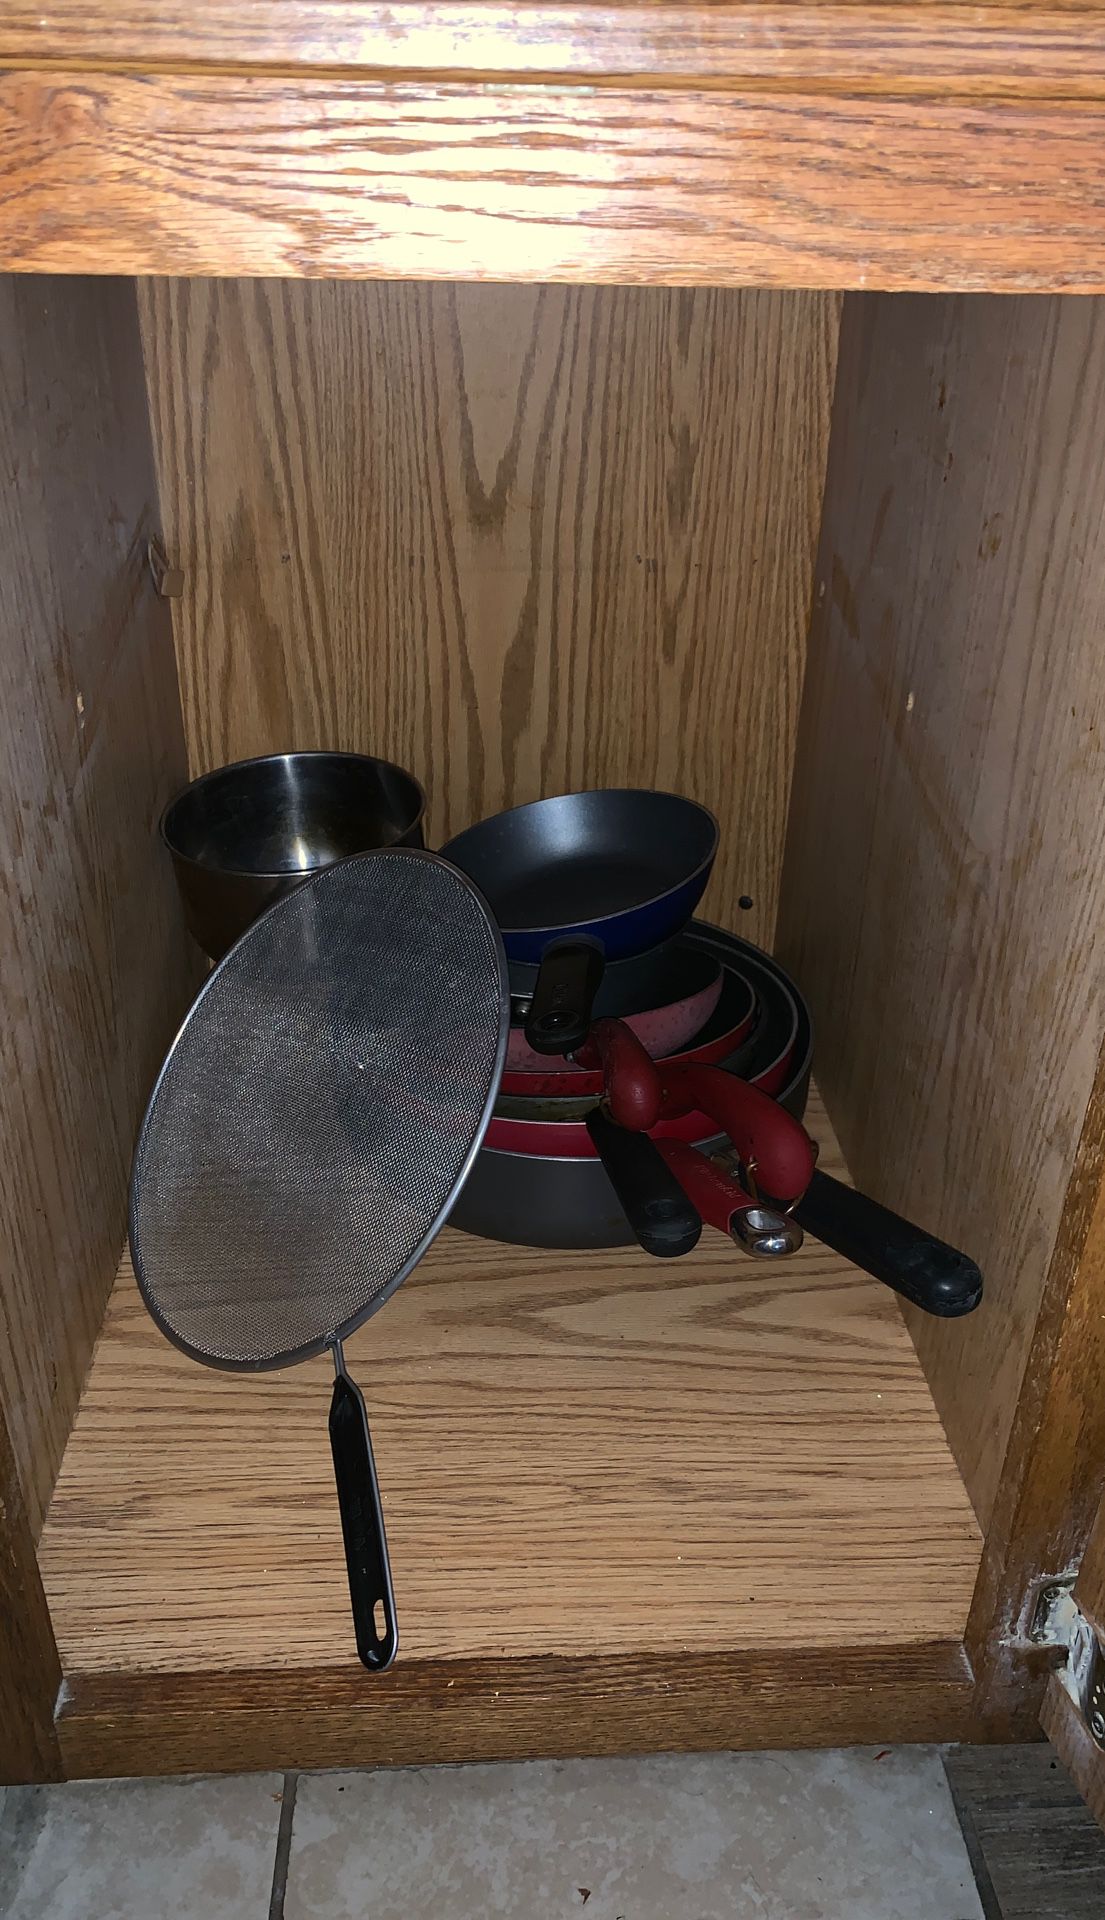 Pot pans and kitchen stuff